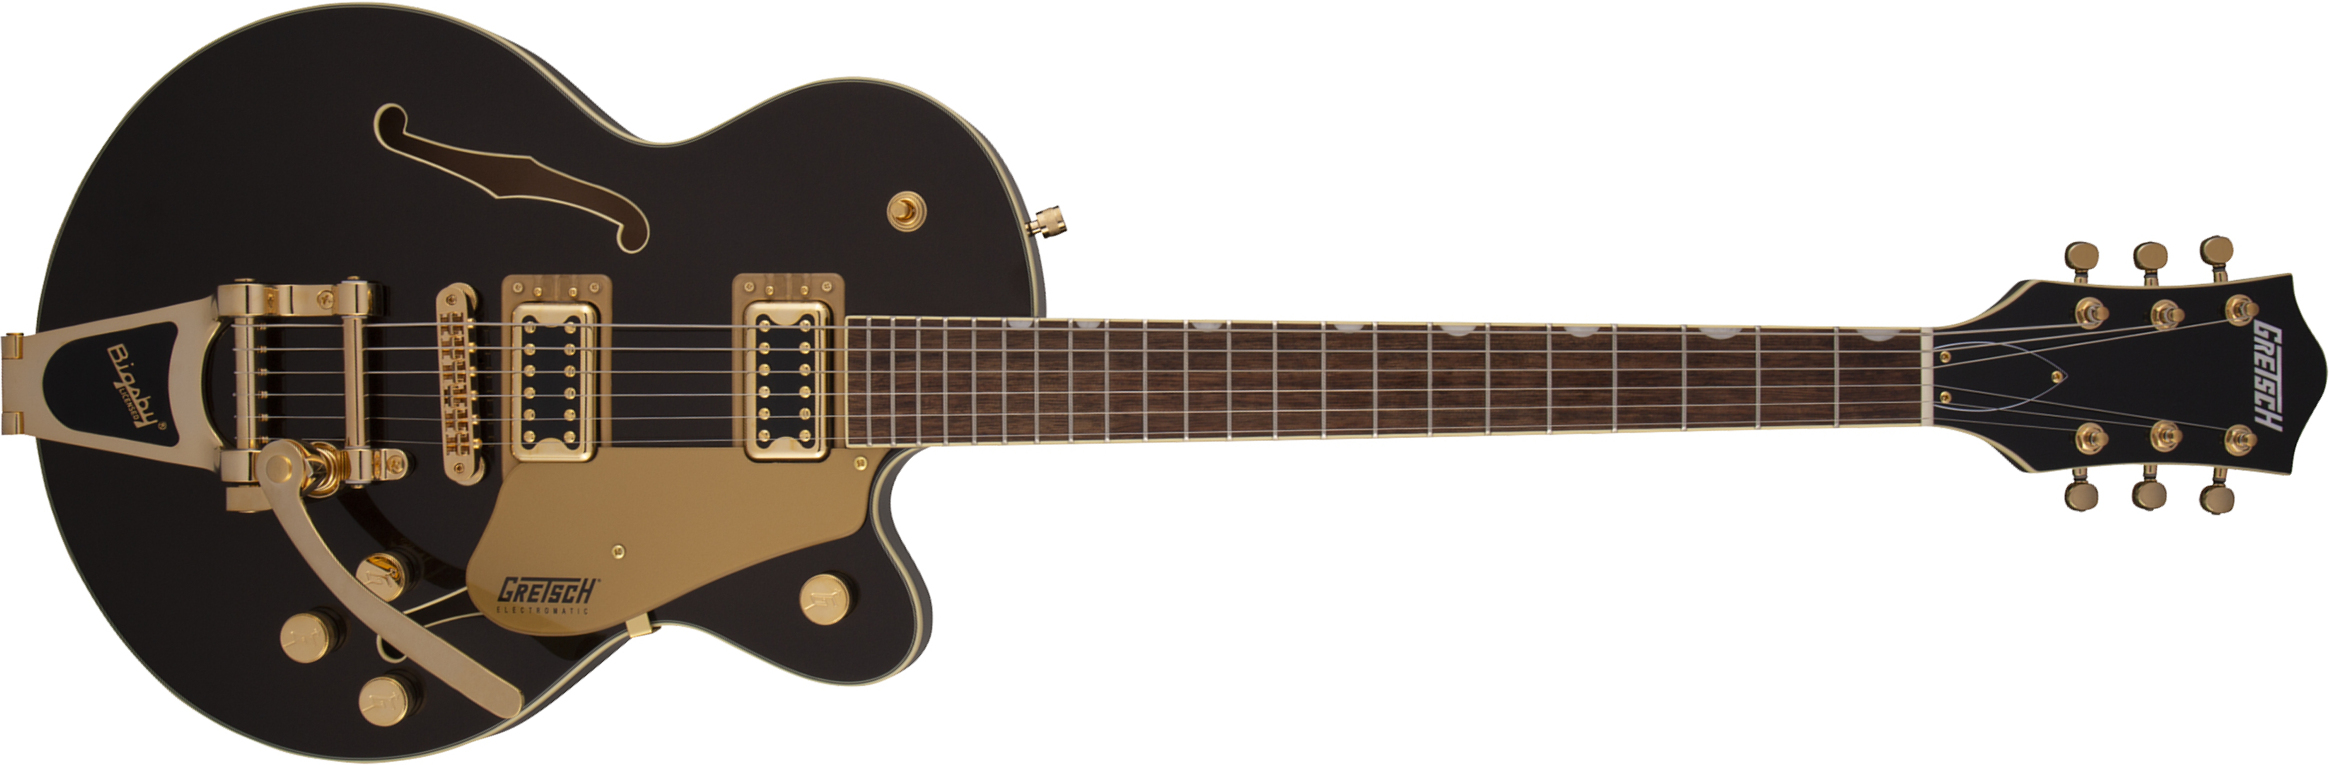 Gretsch G5655tg Electromatic Center Block Jr. Bigsby 2h Trem Lau - Black Gold - Semi-hollow electric guitar - Main picture